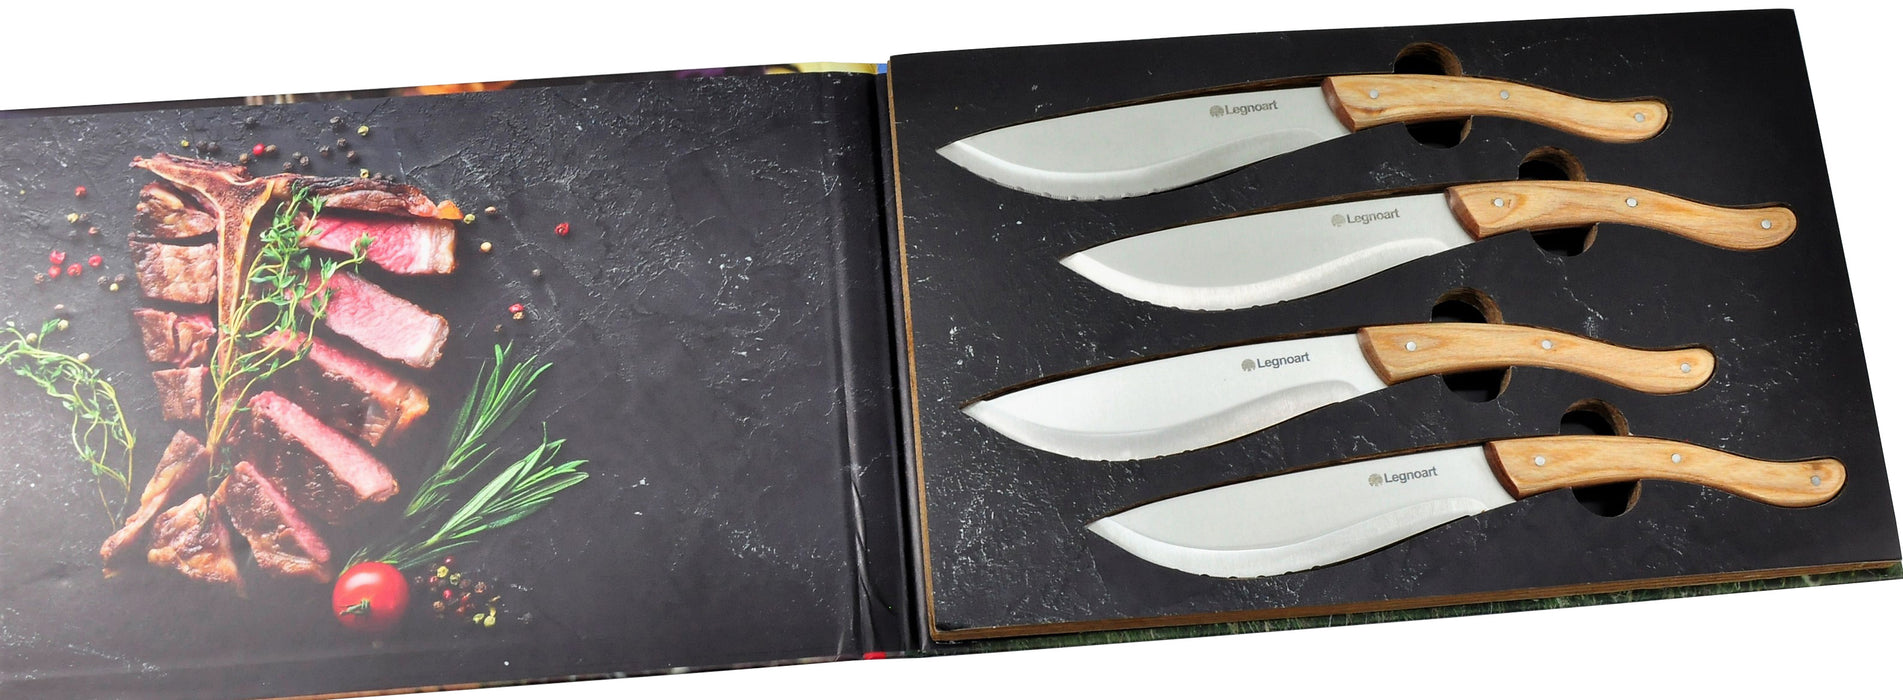 Set of 4 wood handle steak knives